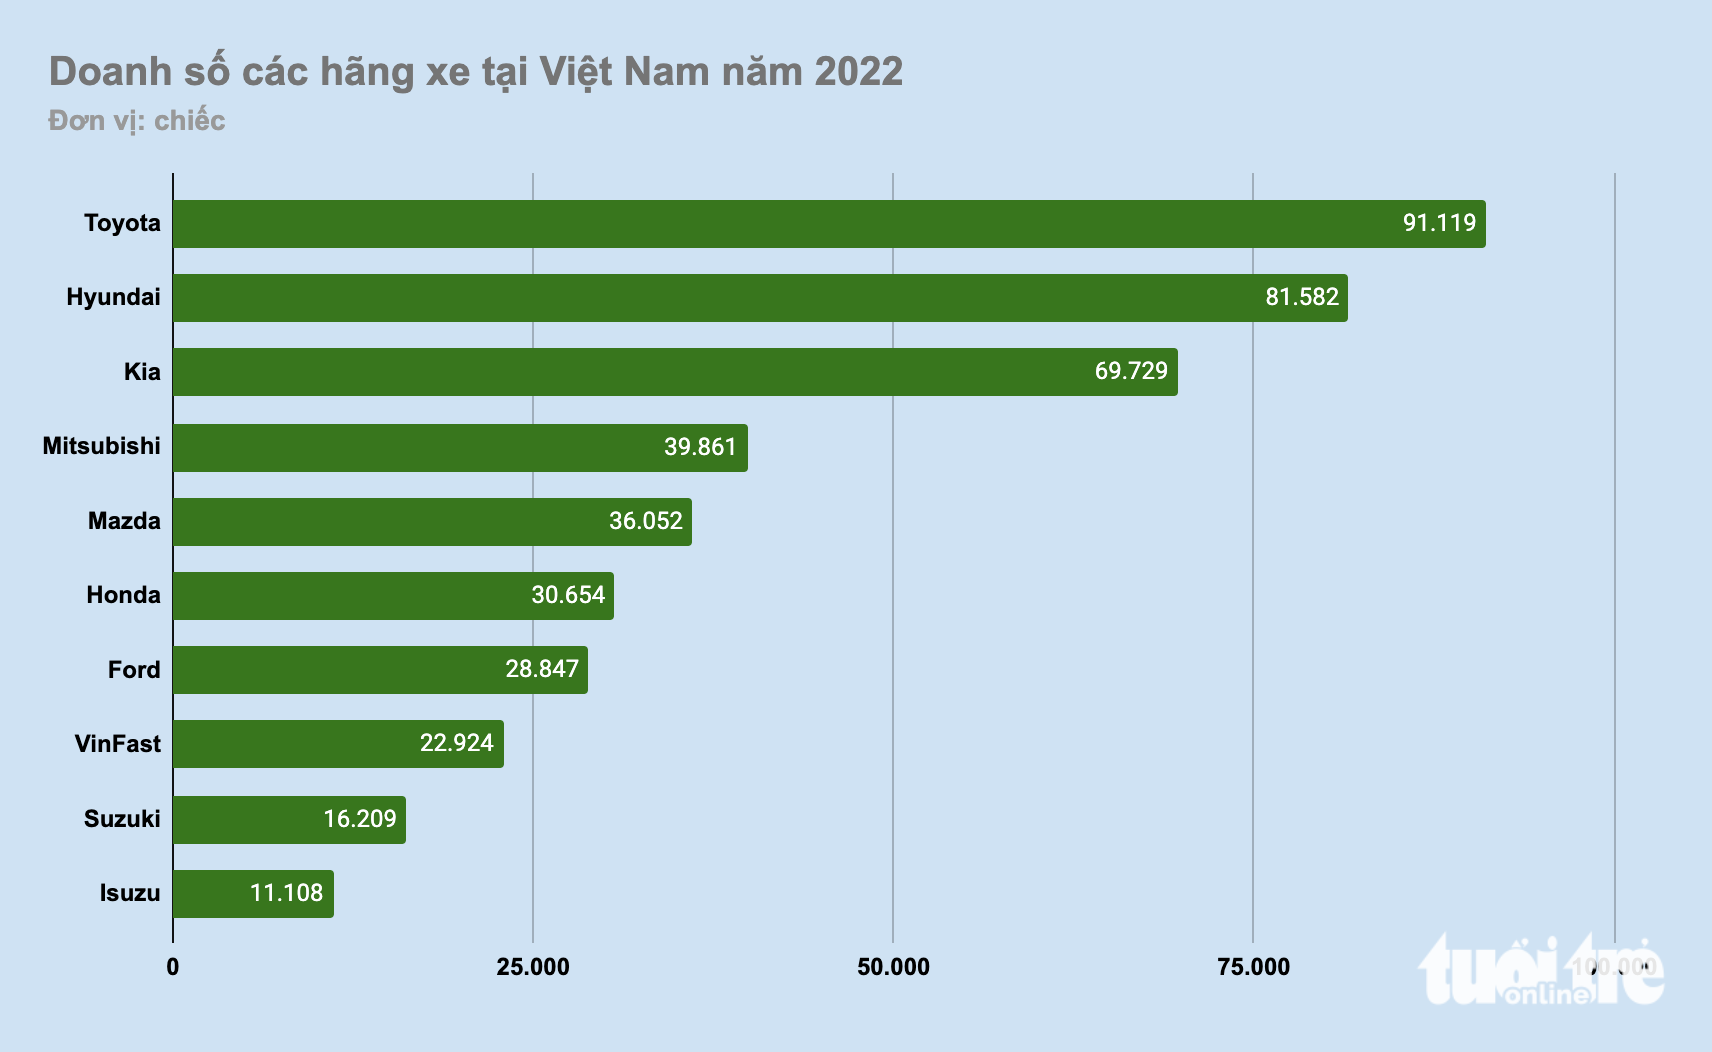 Vietnam records unprecedented sales of over 500,000 cars in 2022